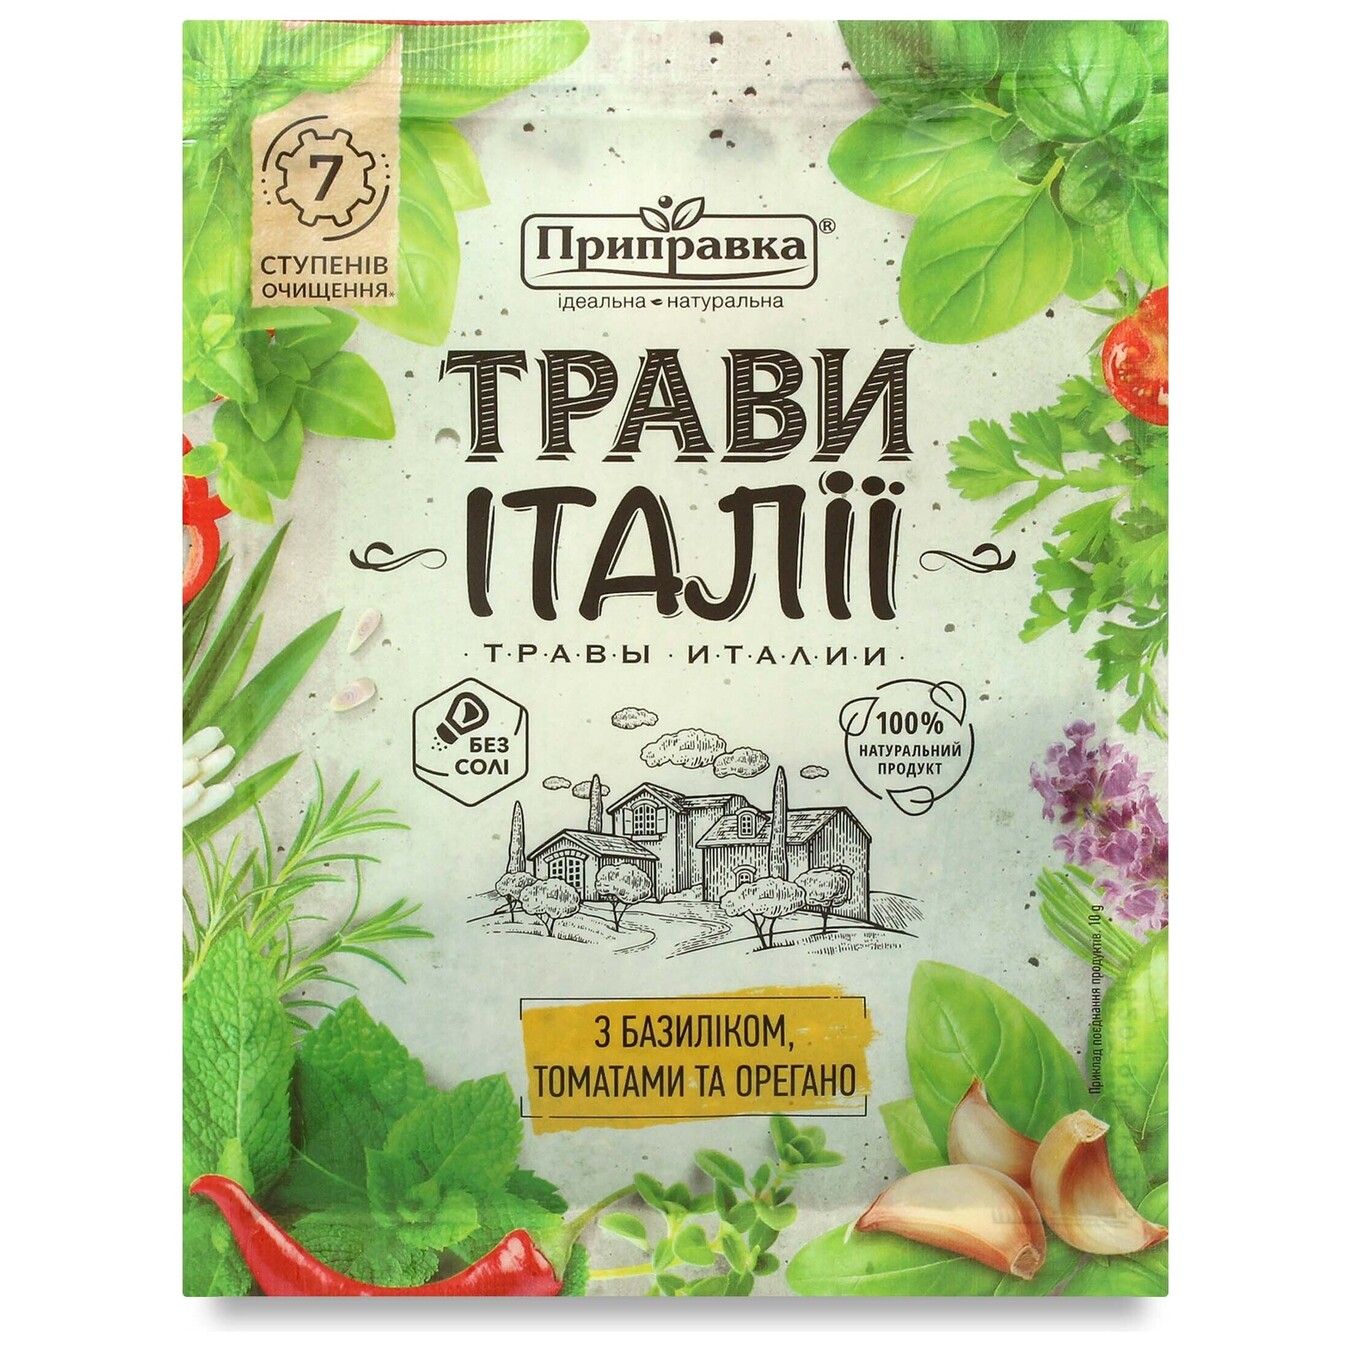 Pripravka herb mix with basil, tomatoes and oregano Spice 10g